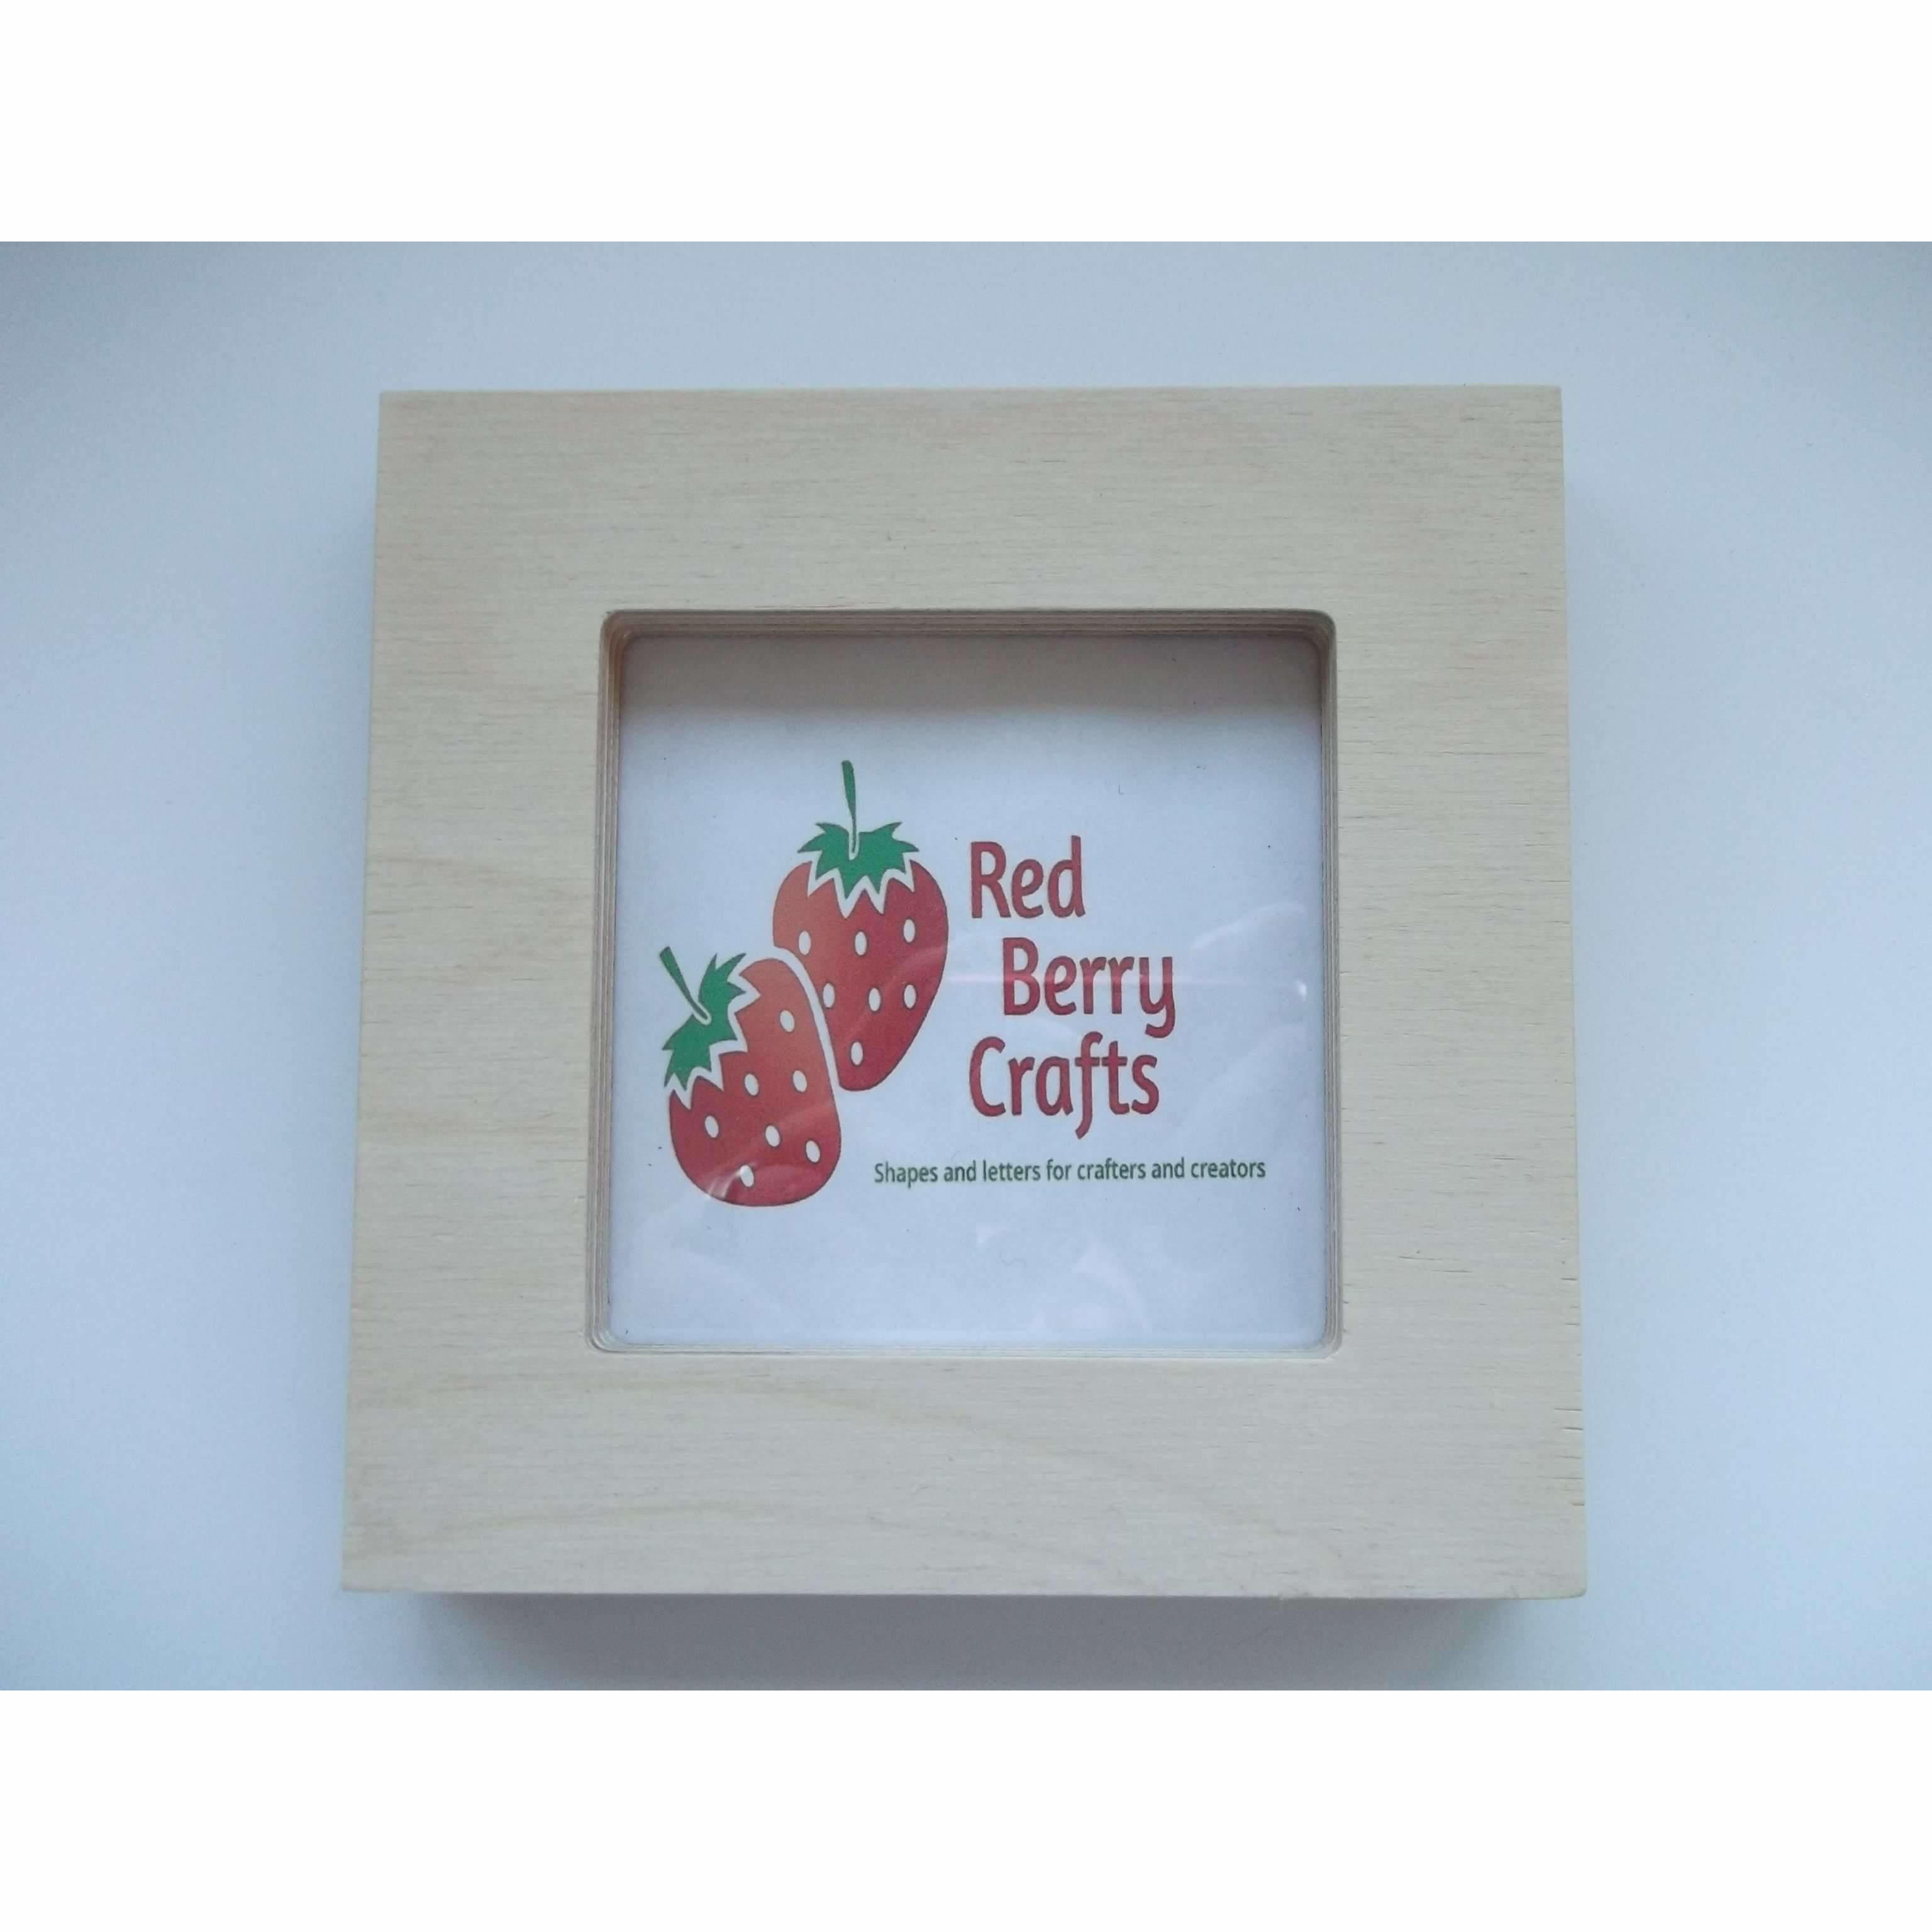 Red Berry Crafts Ltd:Wooden Block 13cm x 13cm Photo Frame